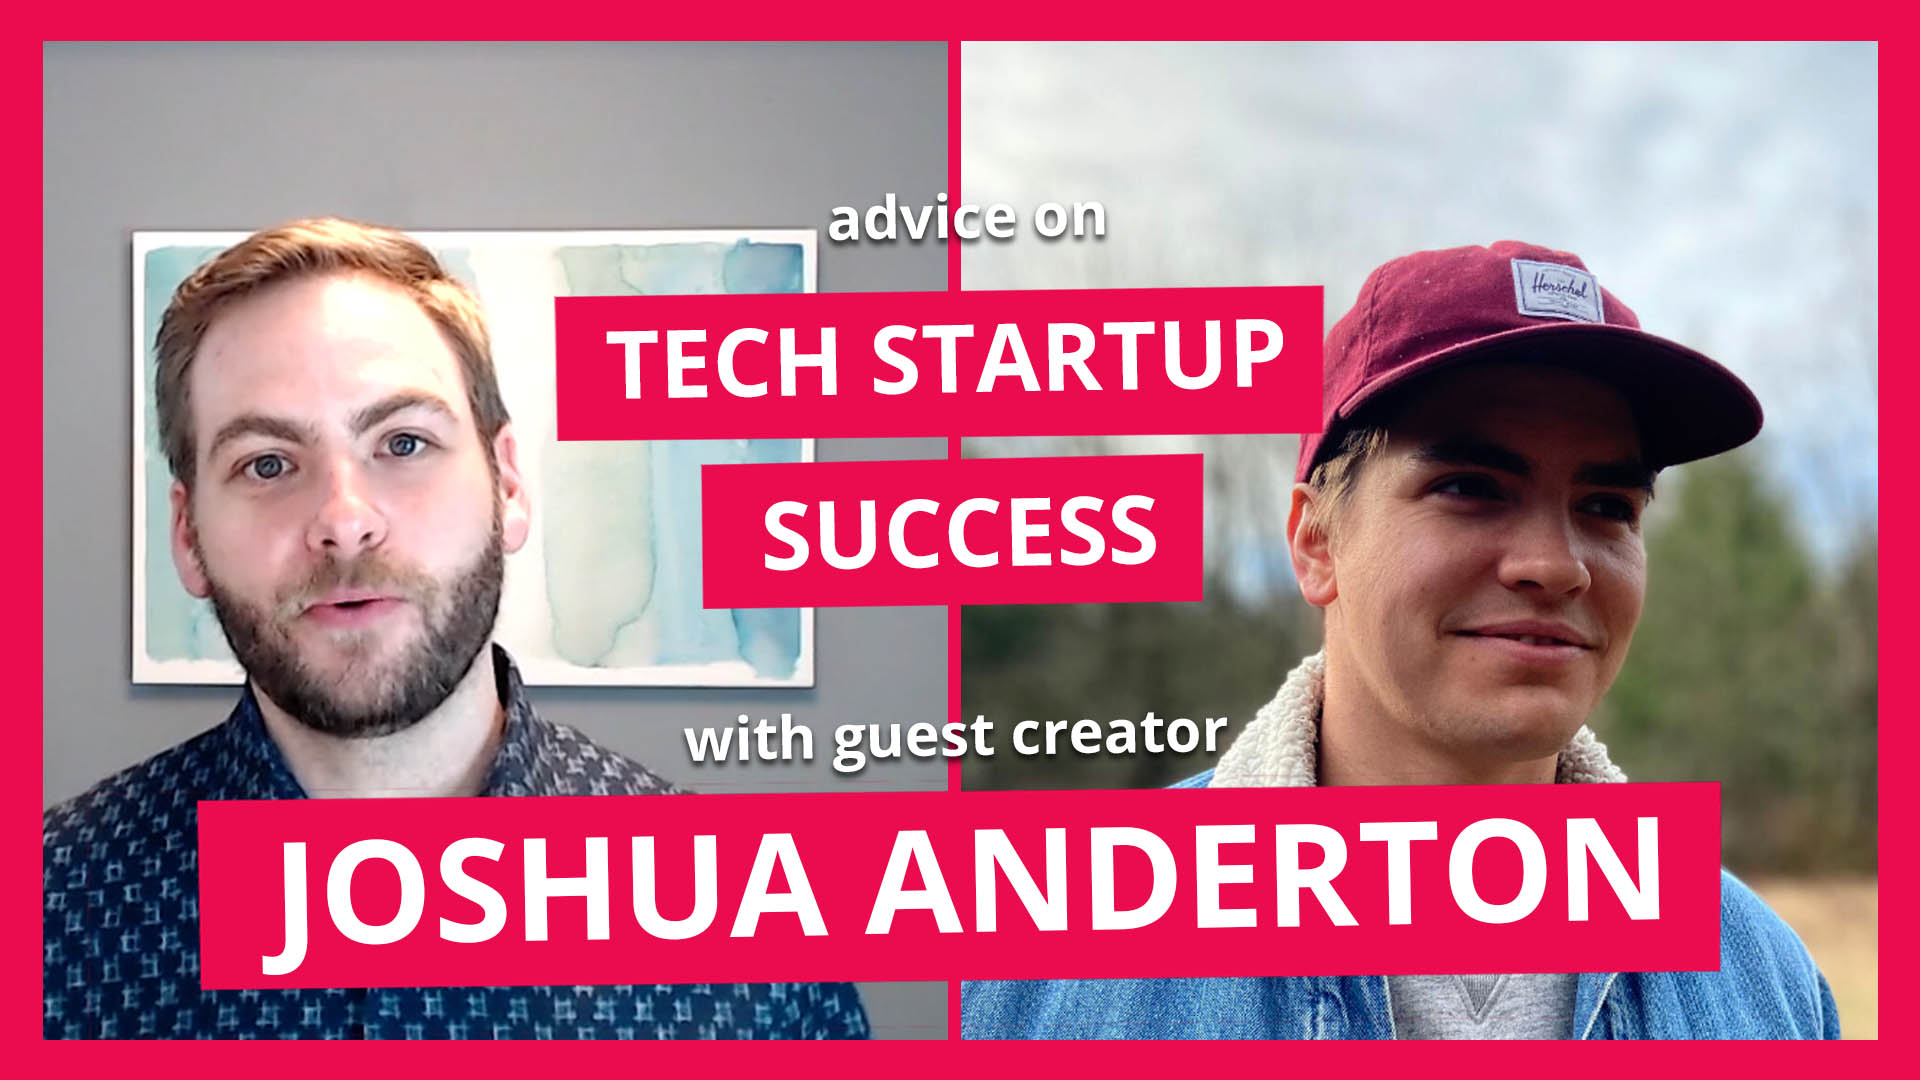 Joshua Anderson talks about tech startup success